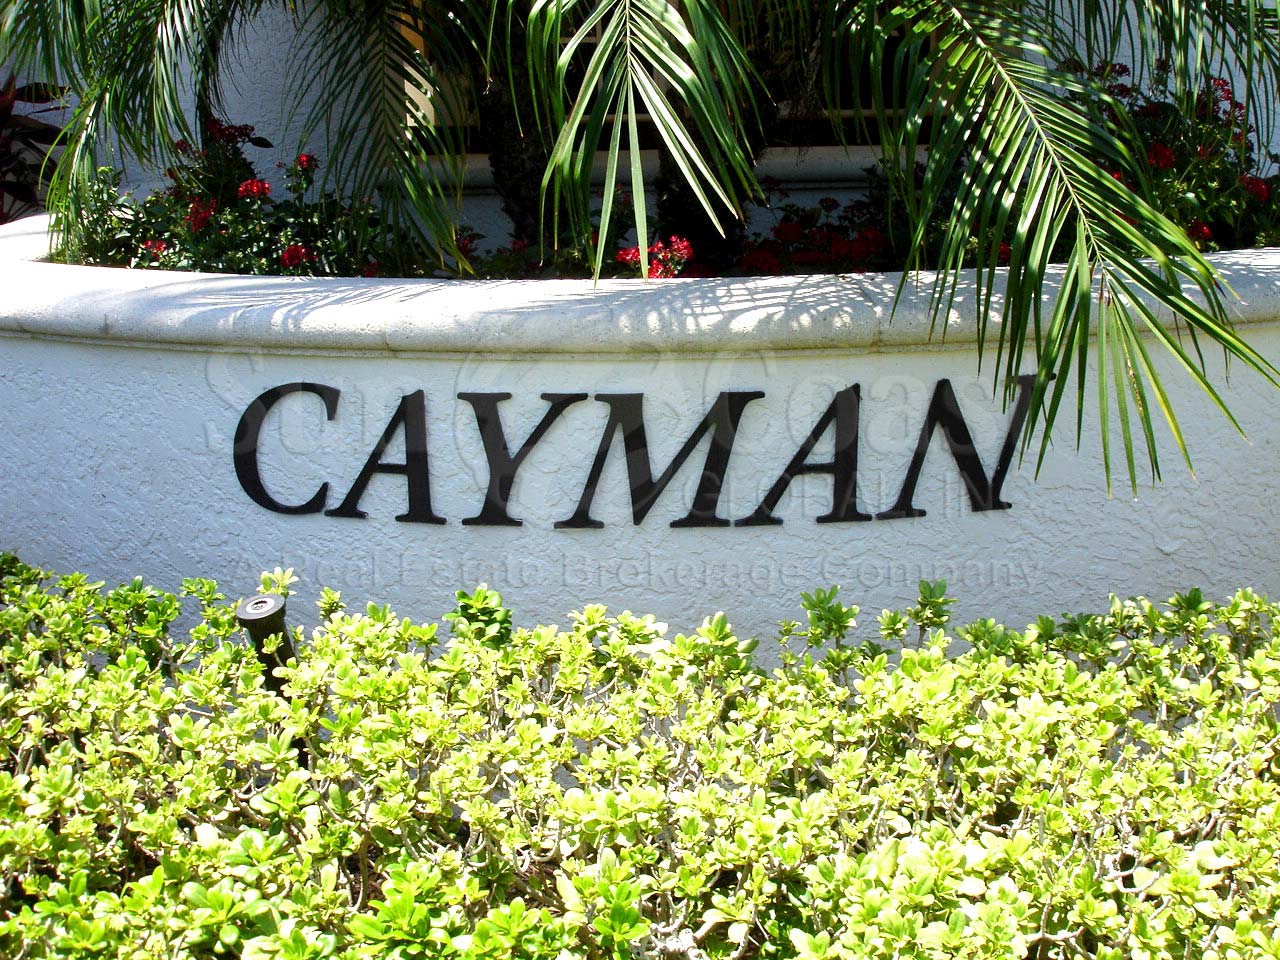 Cayman Signage